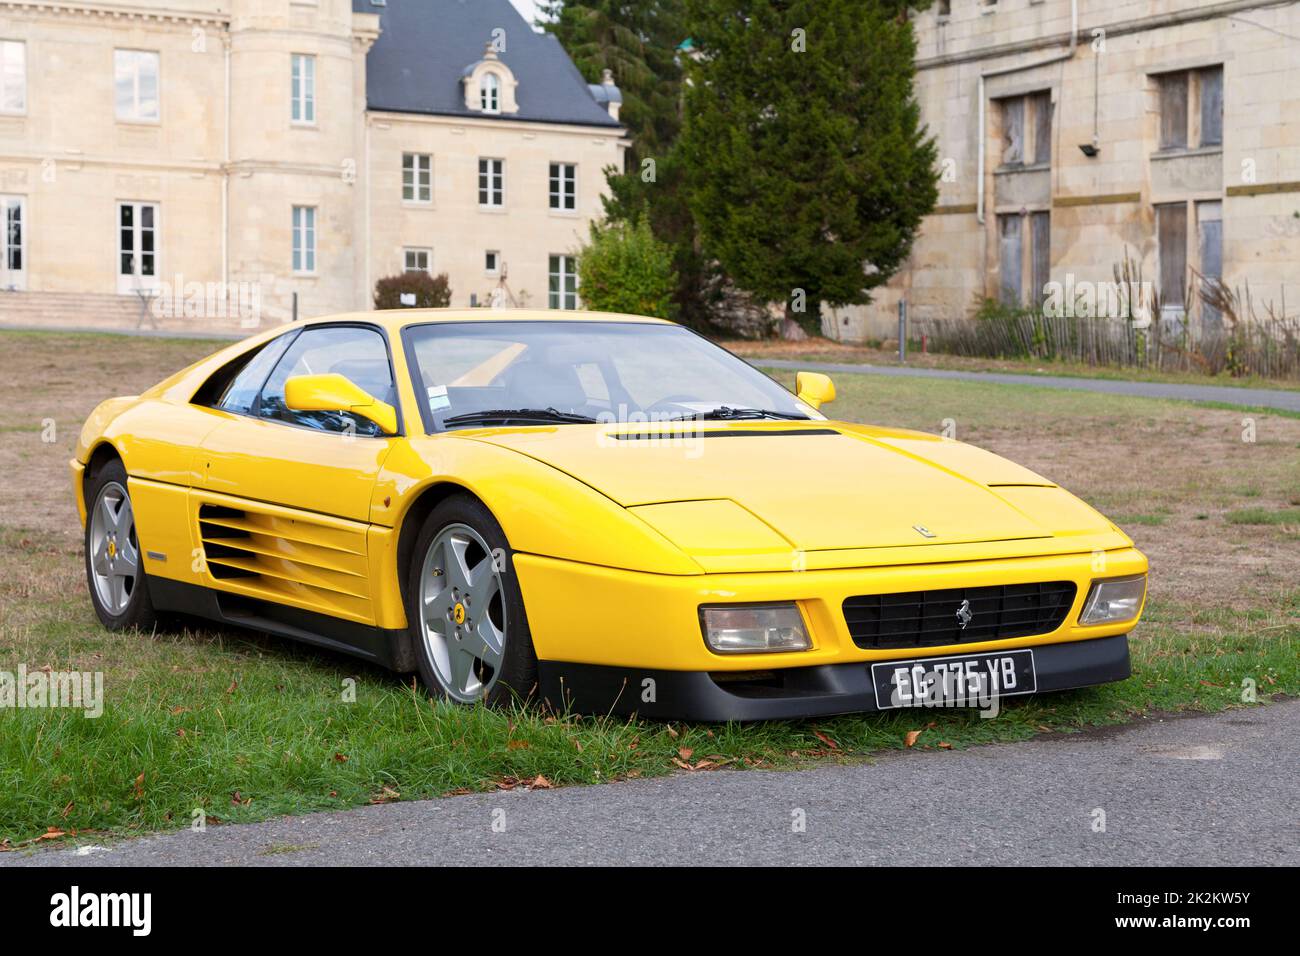 Lamorlaye, France -  September 06 2020: Yellow Ferrari 348 (Type F119), a mid-engine V8-powered 2-seat sports car produced by Italian automaker Ferrar Stock Photo